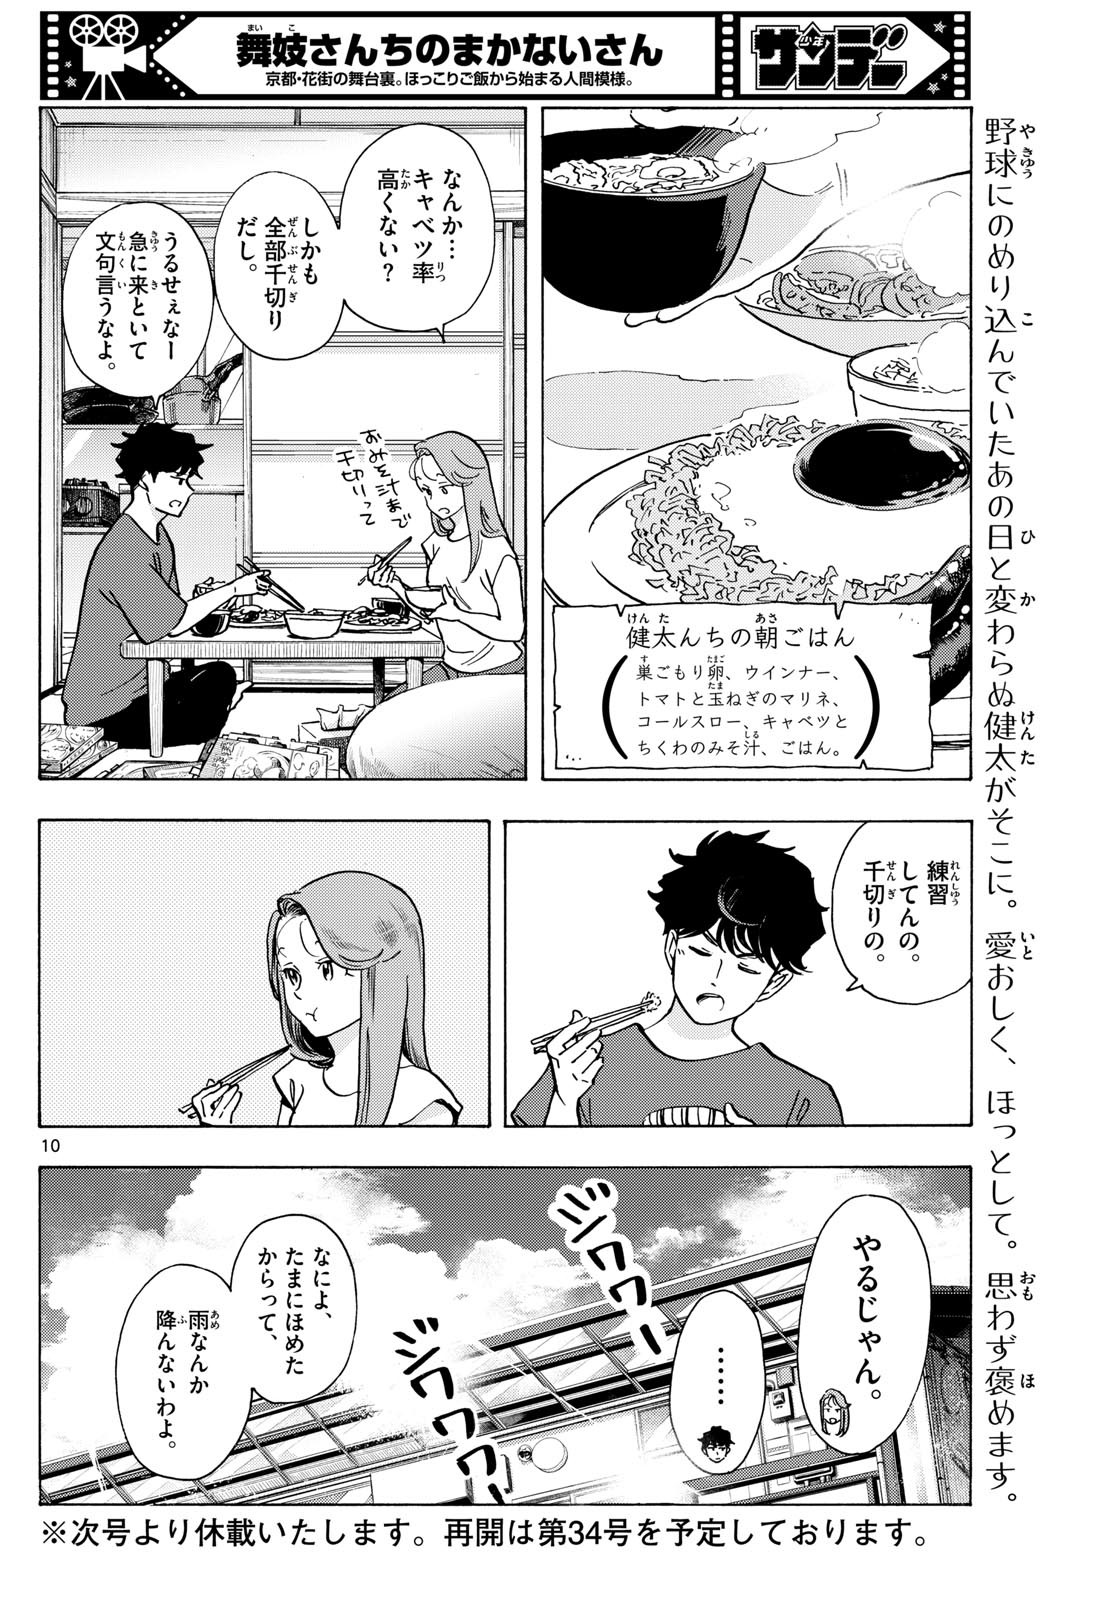 Maiko-san Chi no Makanai-san - Chapter 306 - Page 10